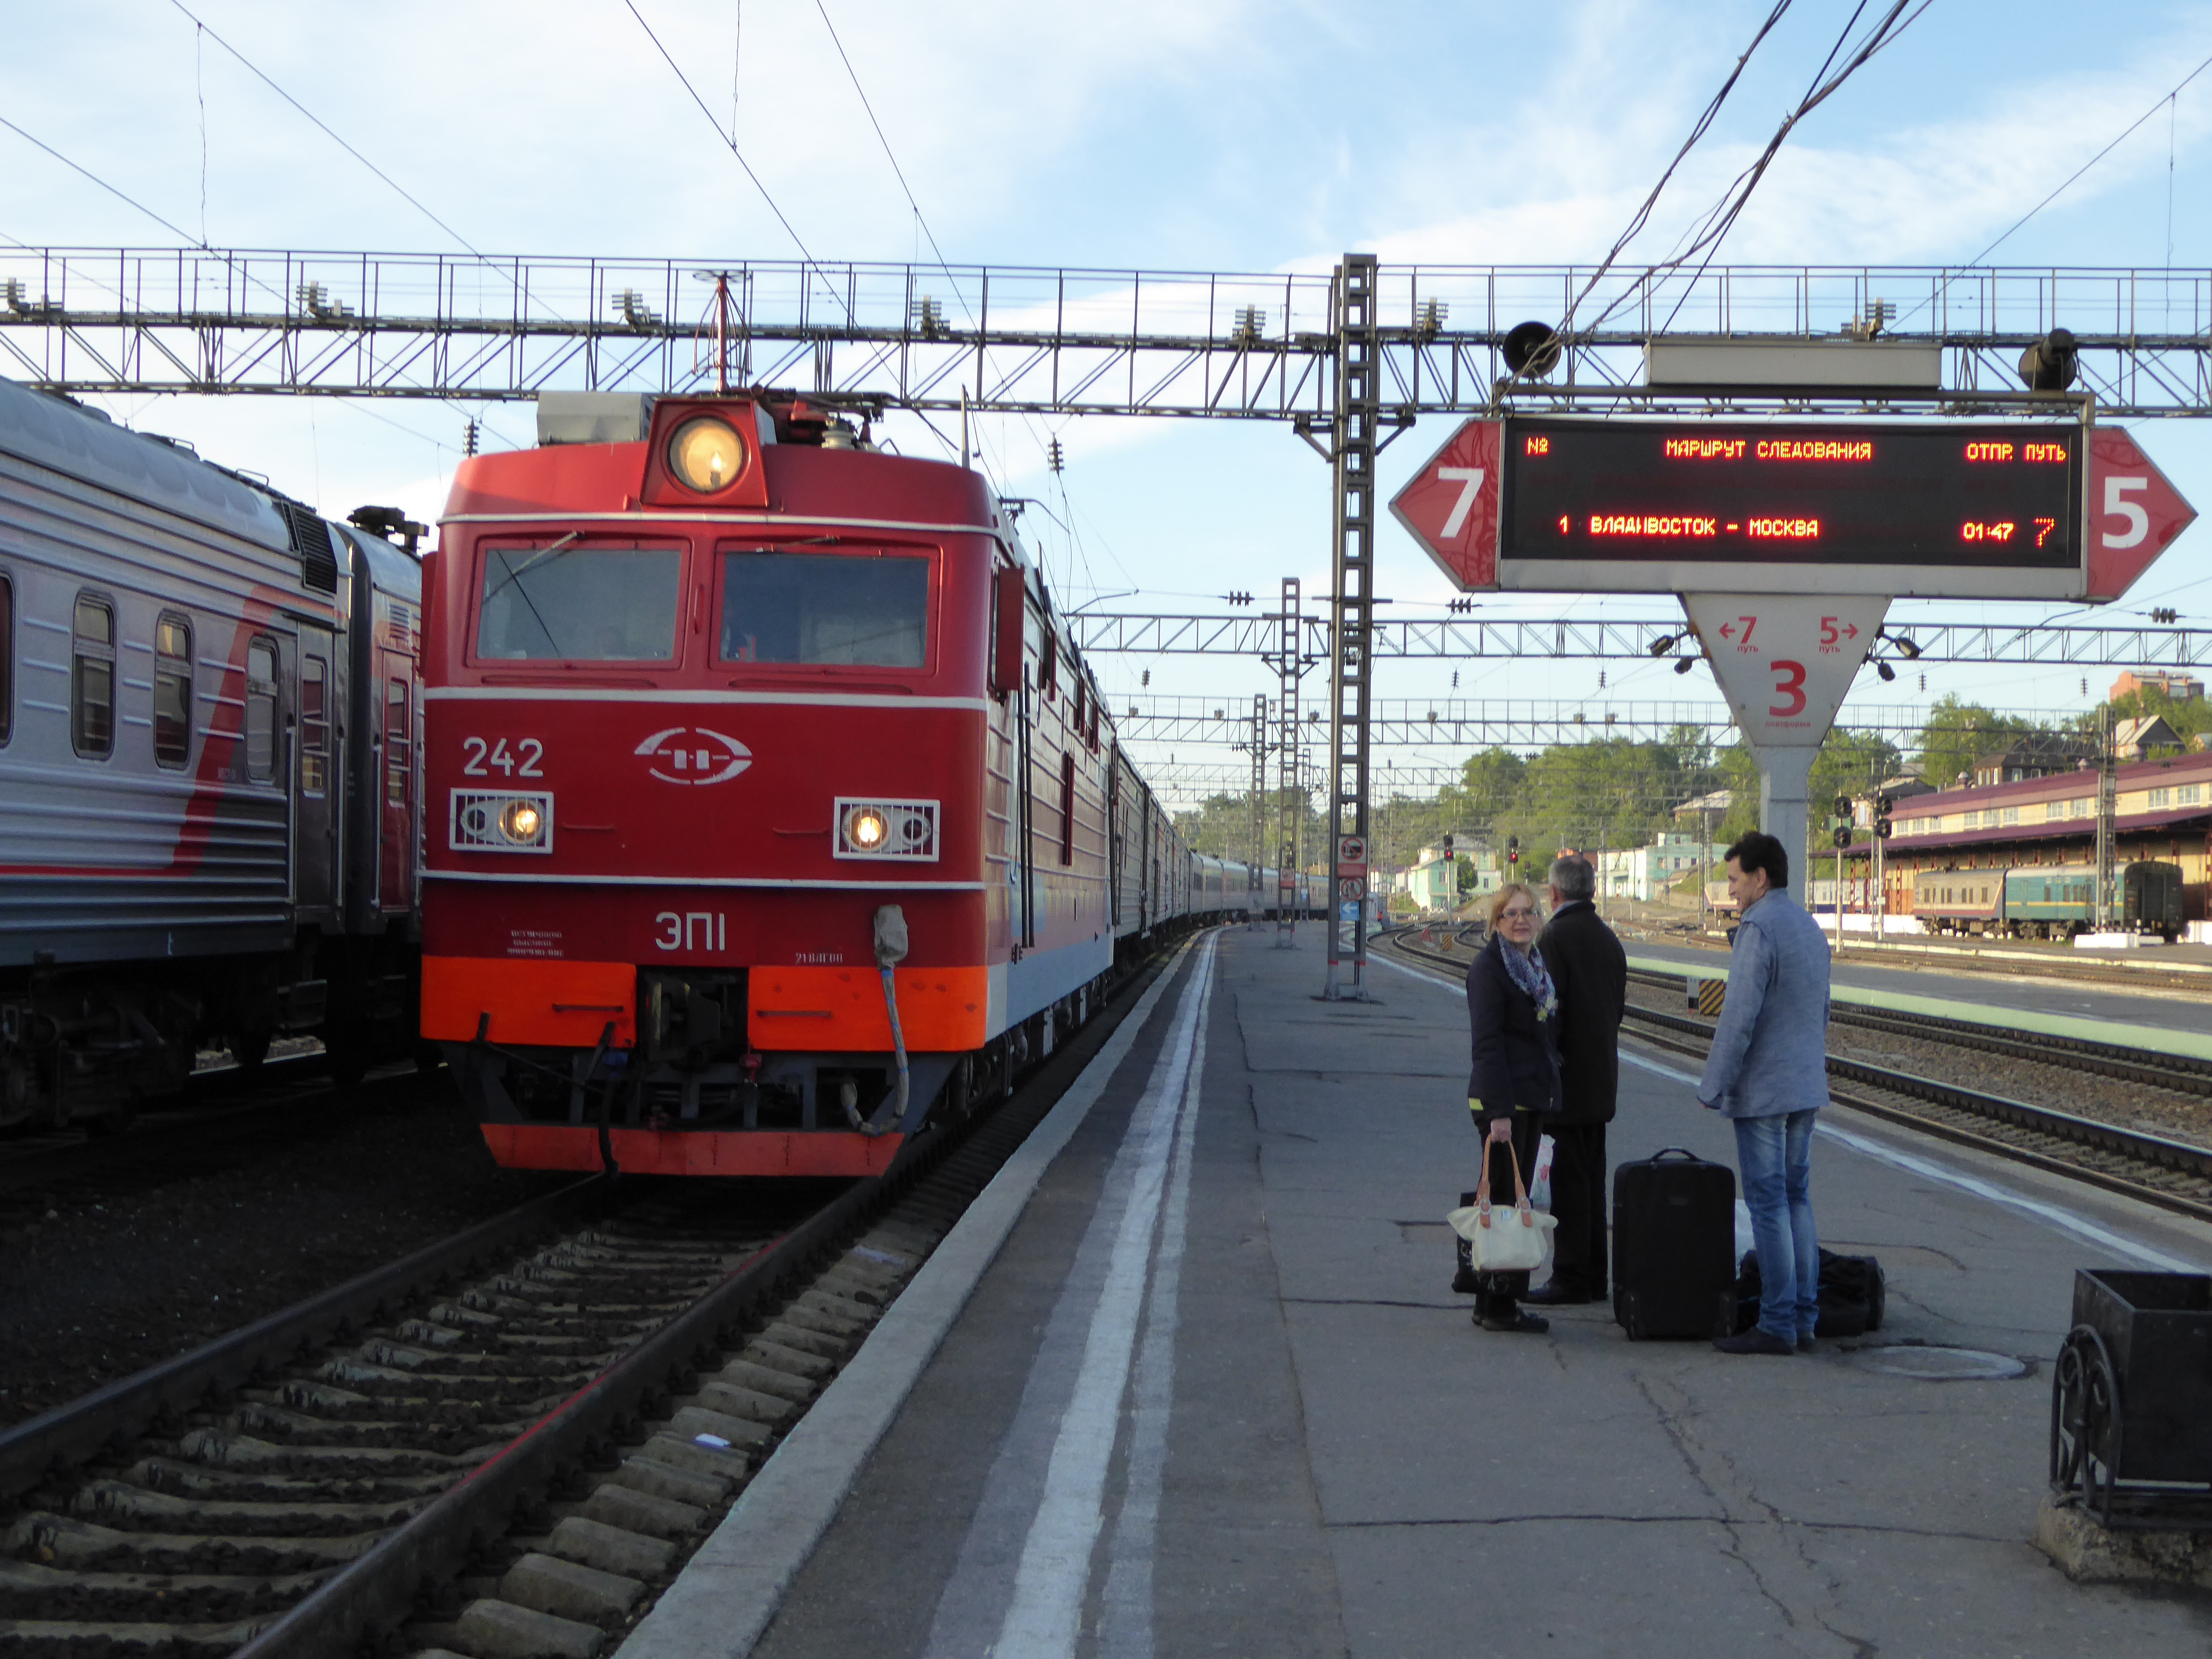 Mongolia, Siberia & Russia by train